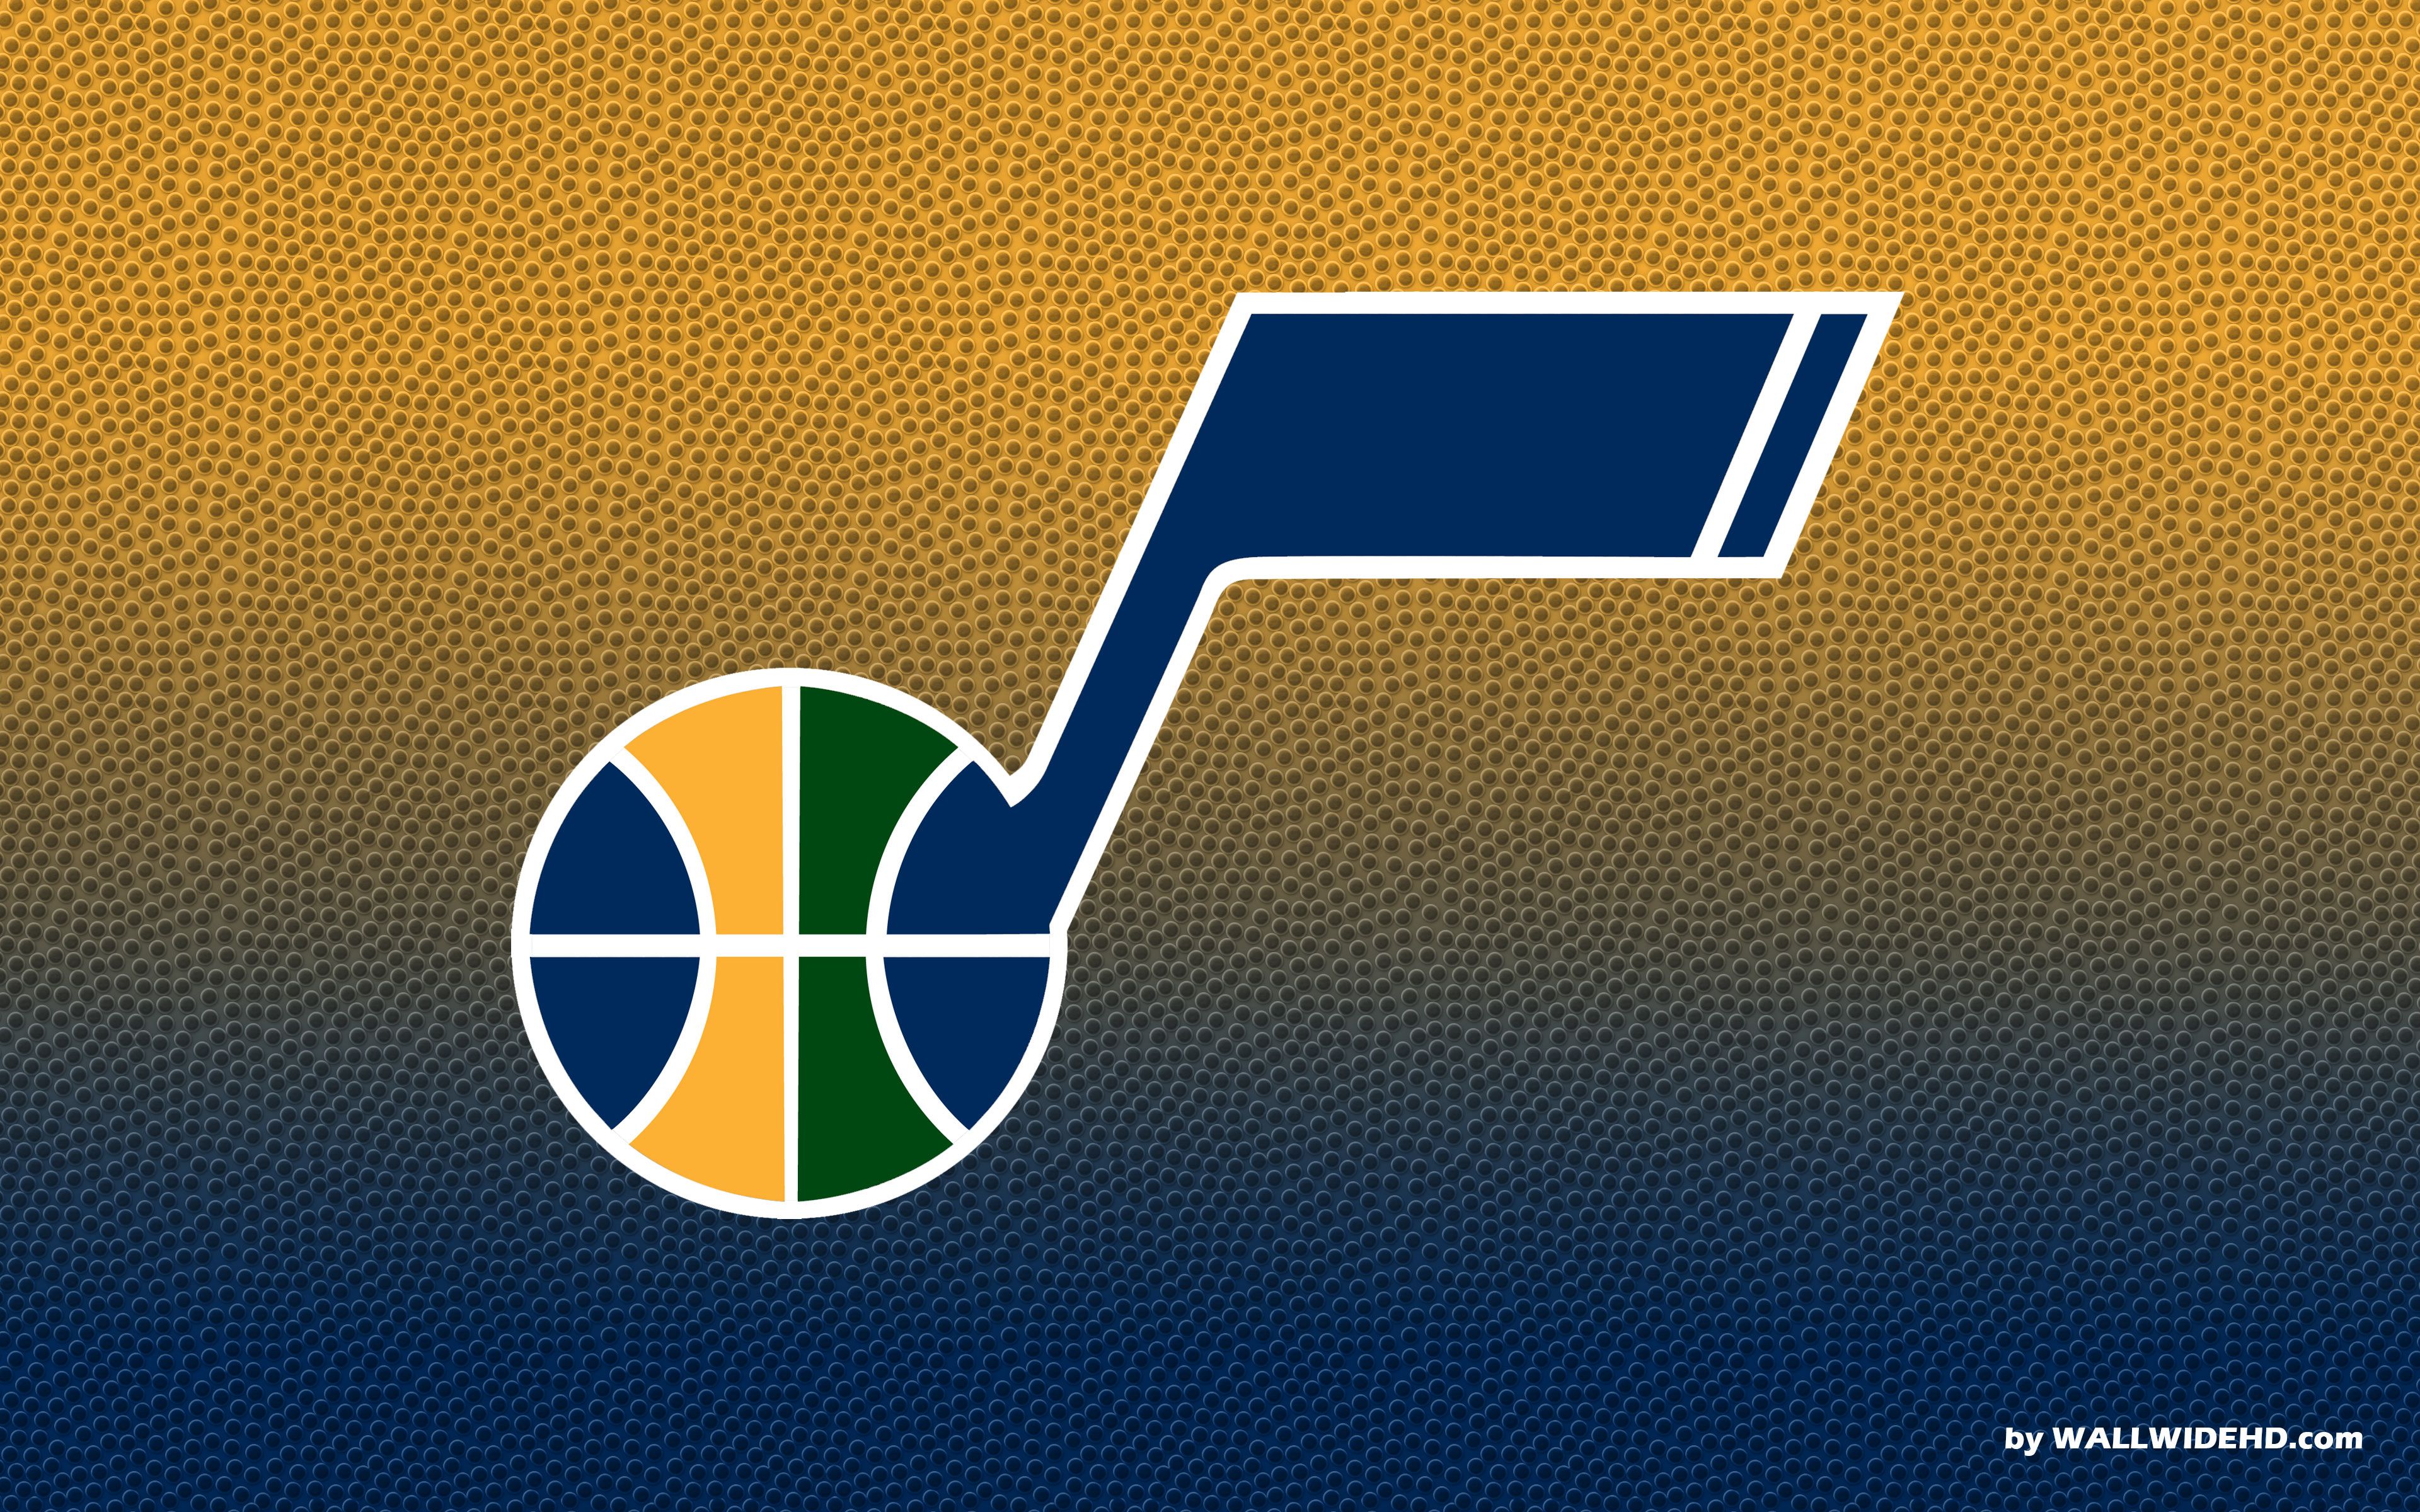 Utah Jazz Logos Clip Art